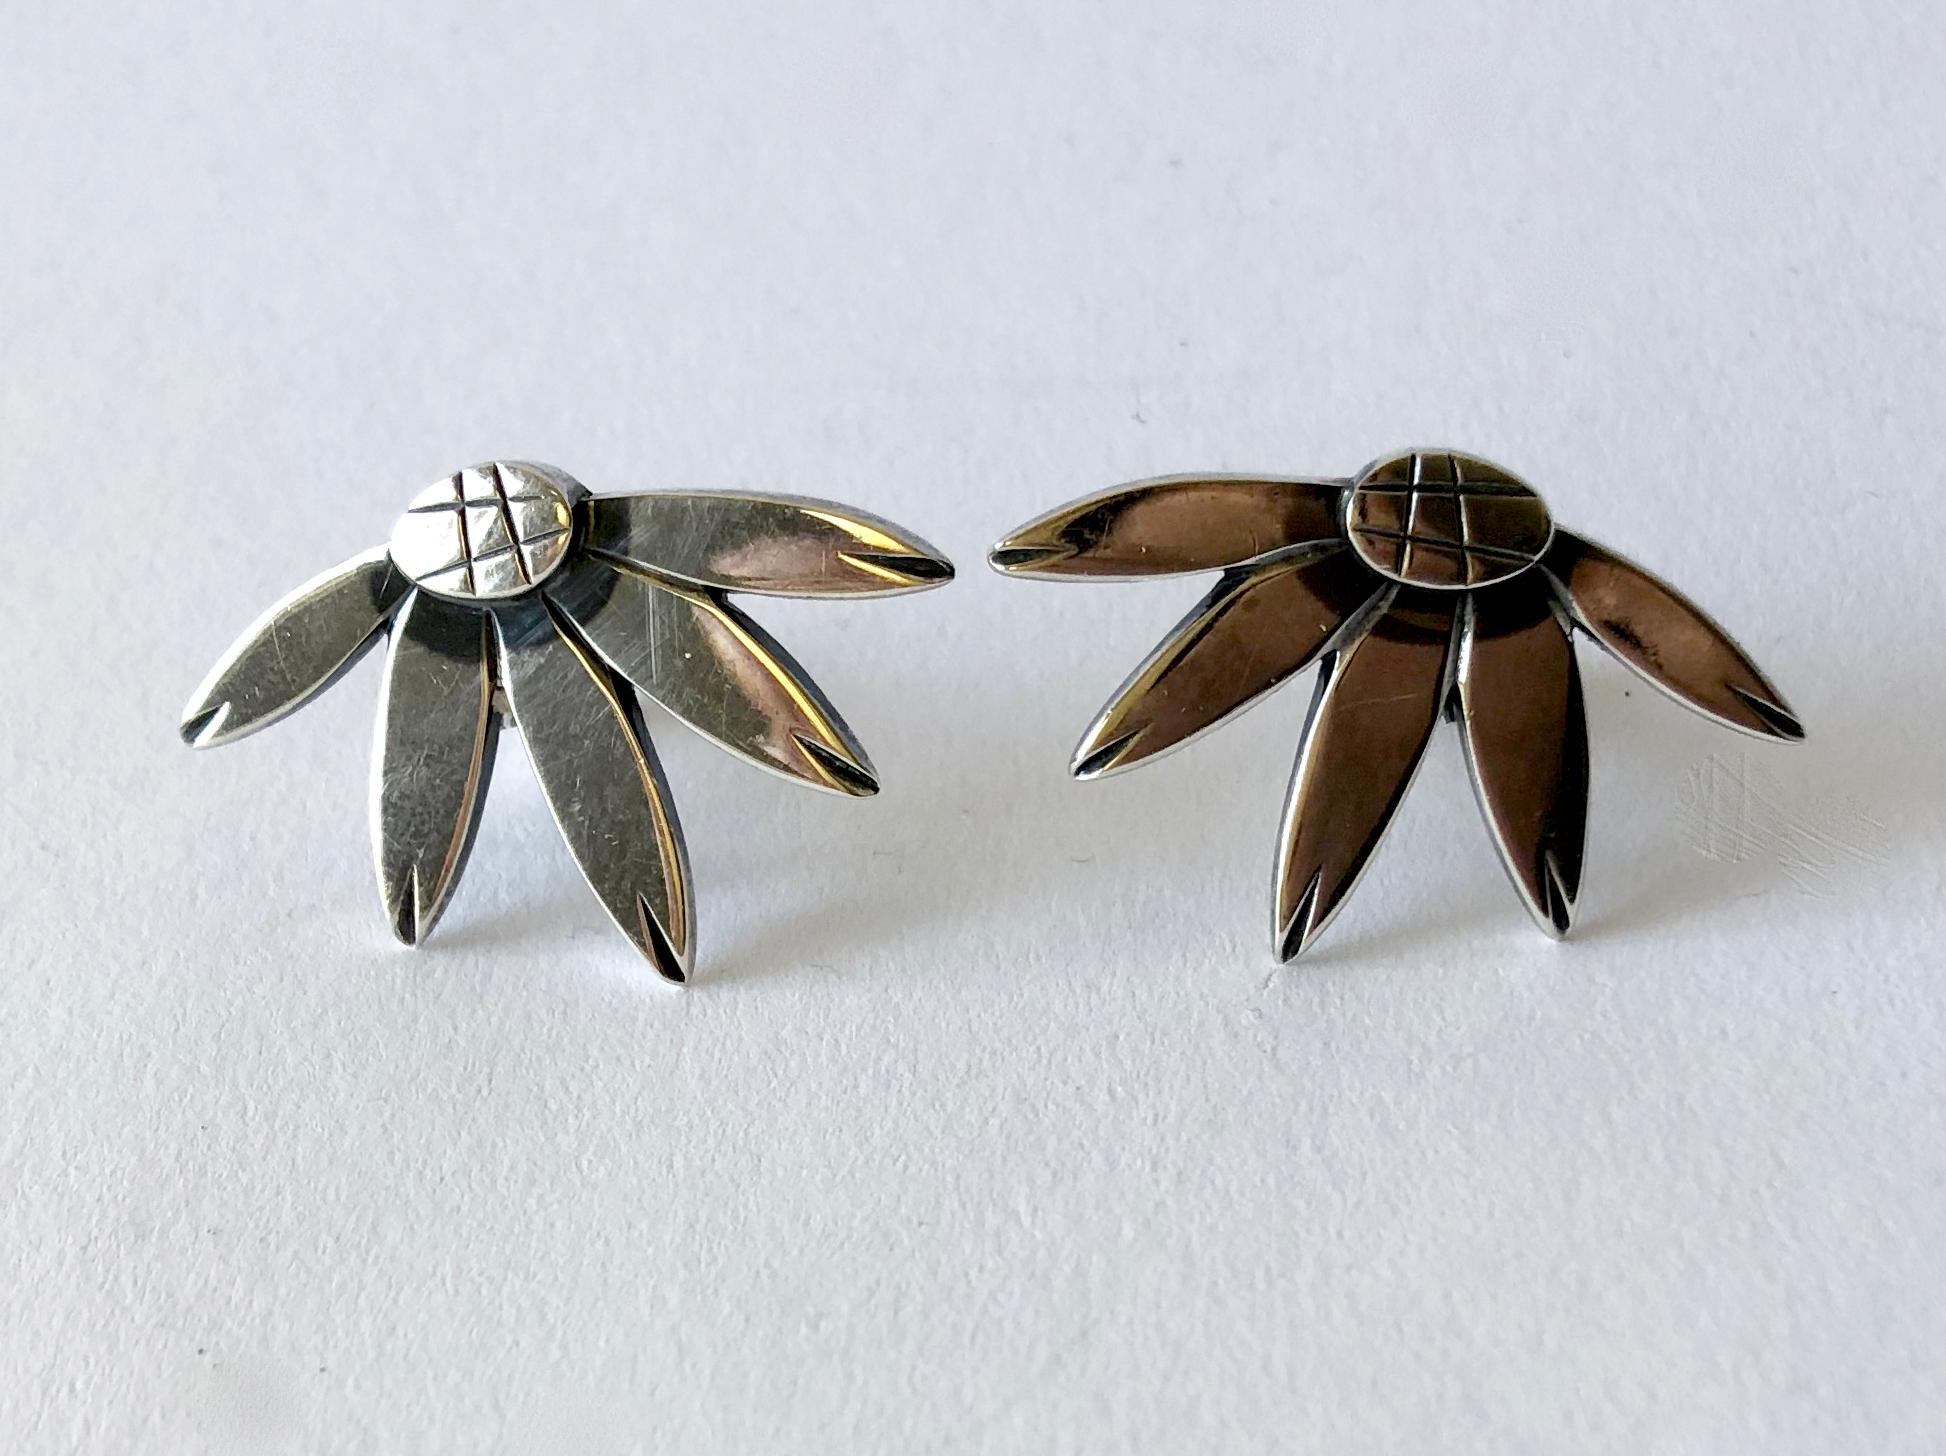 1950s modernist sterling silver clip on earrings created by Janiye Matsukata for Atelier Janiye, Boston Massachusetts.  Earrings measure 1 3/8